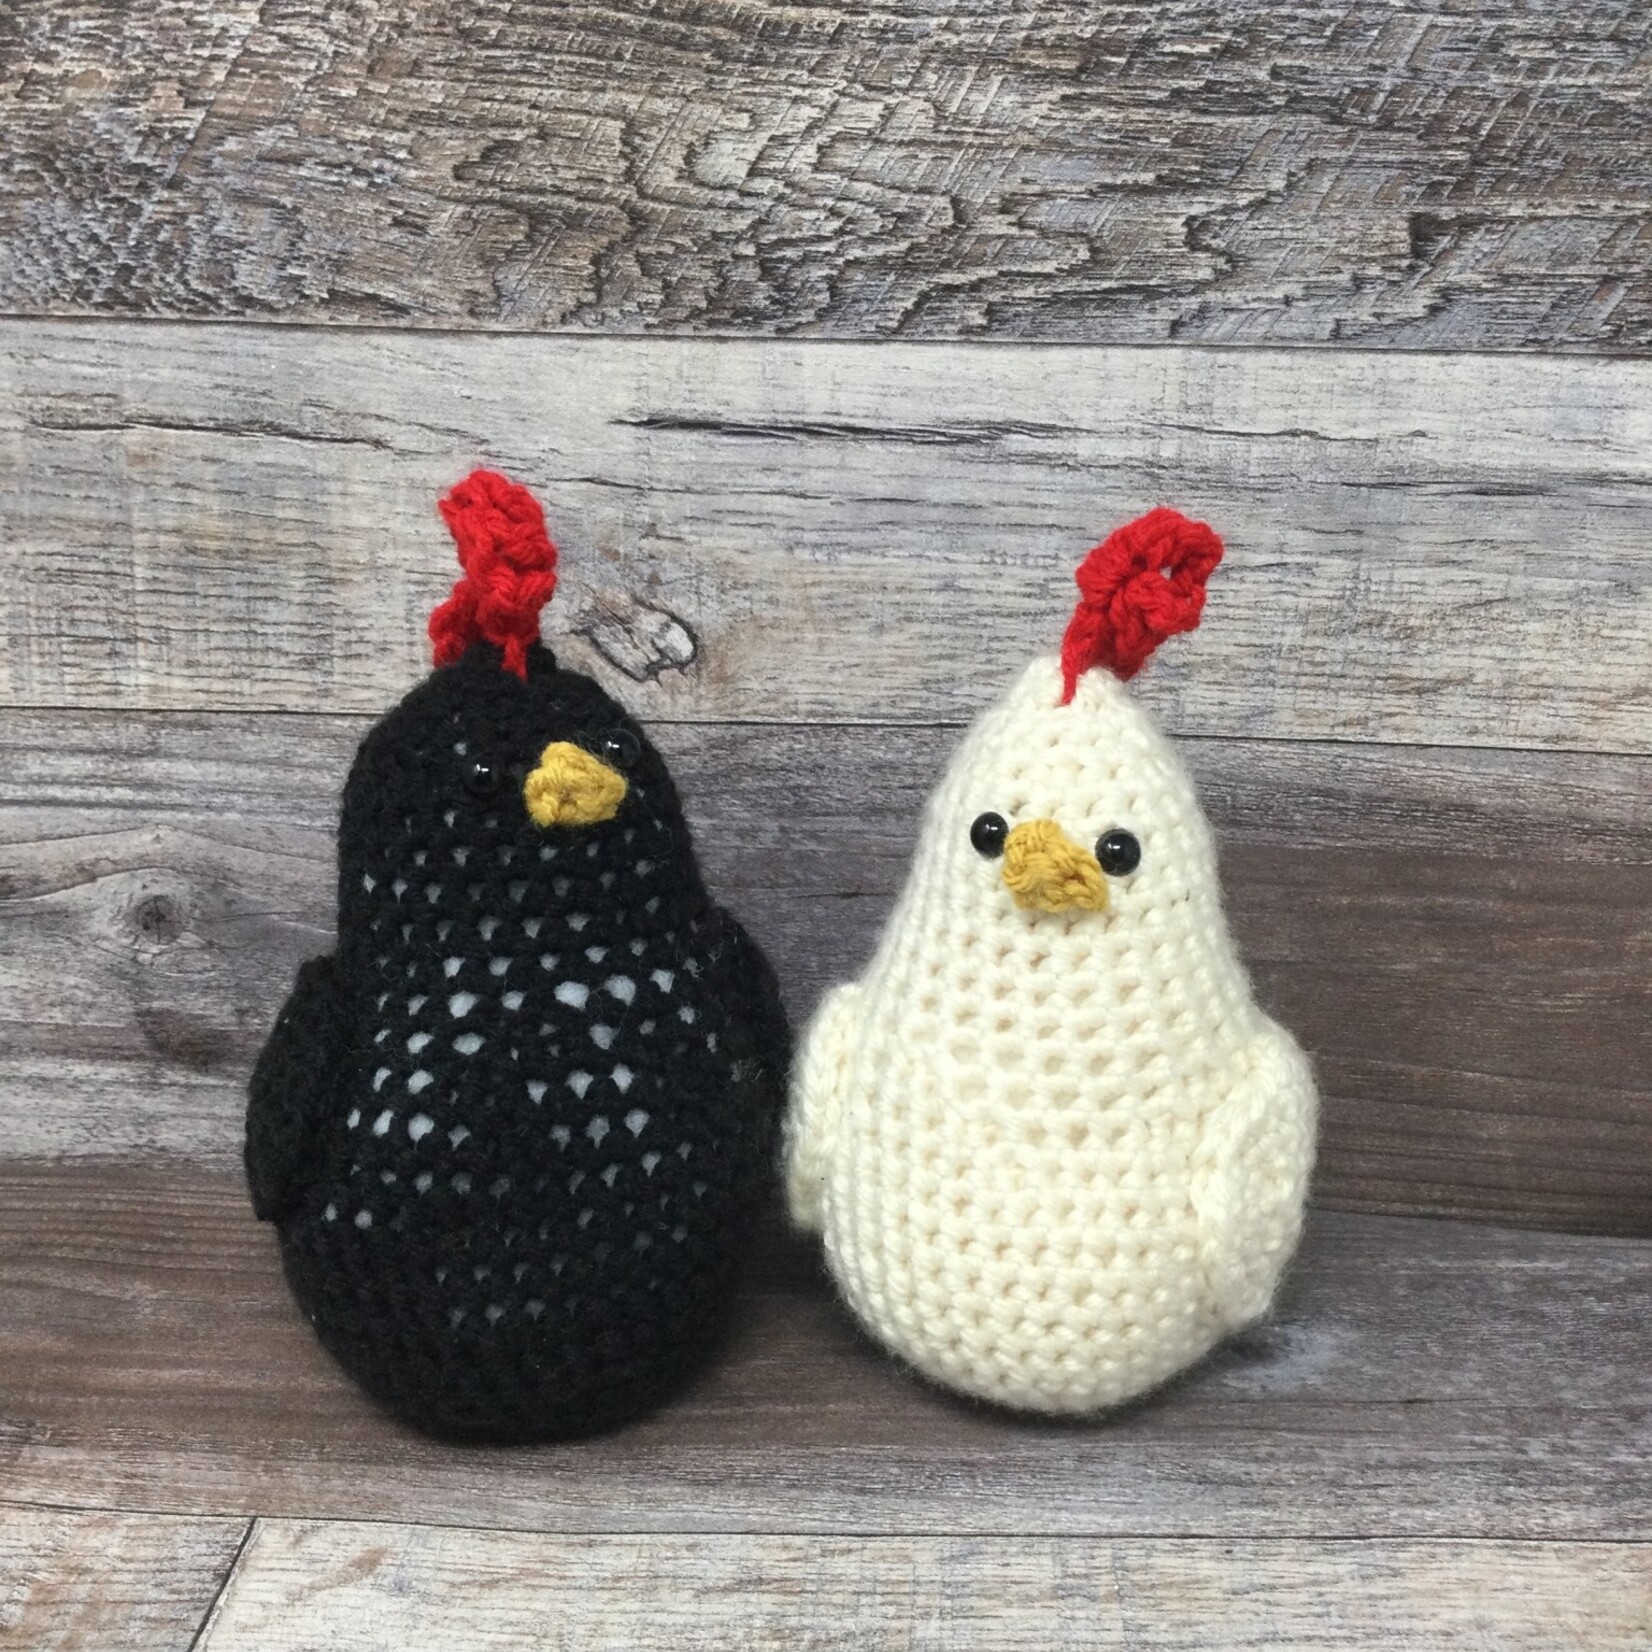 Diana's Crocheted Chicken